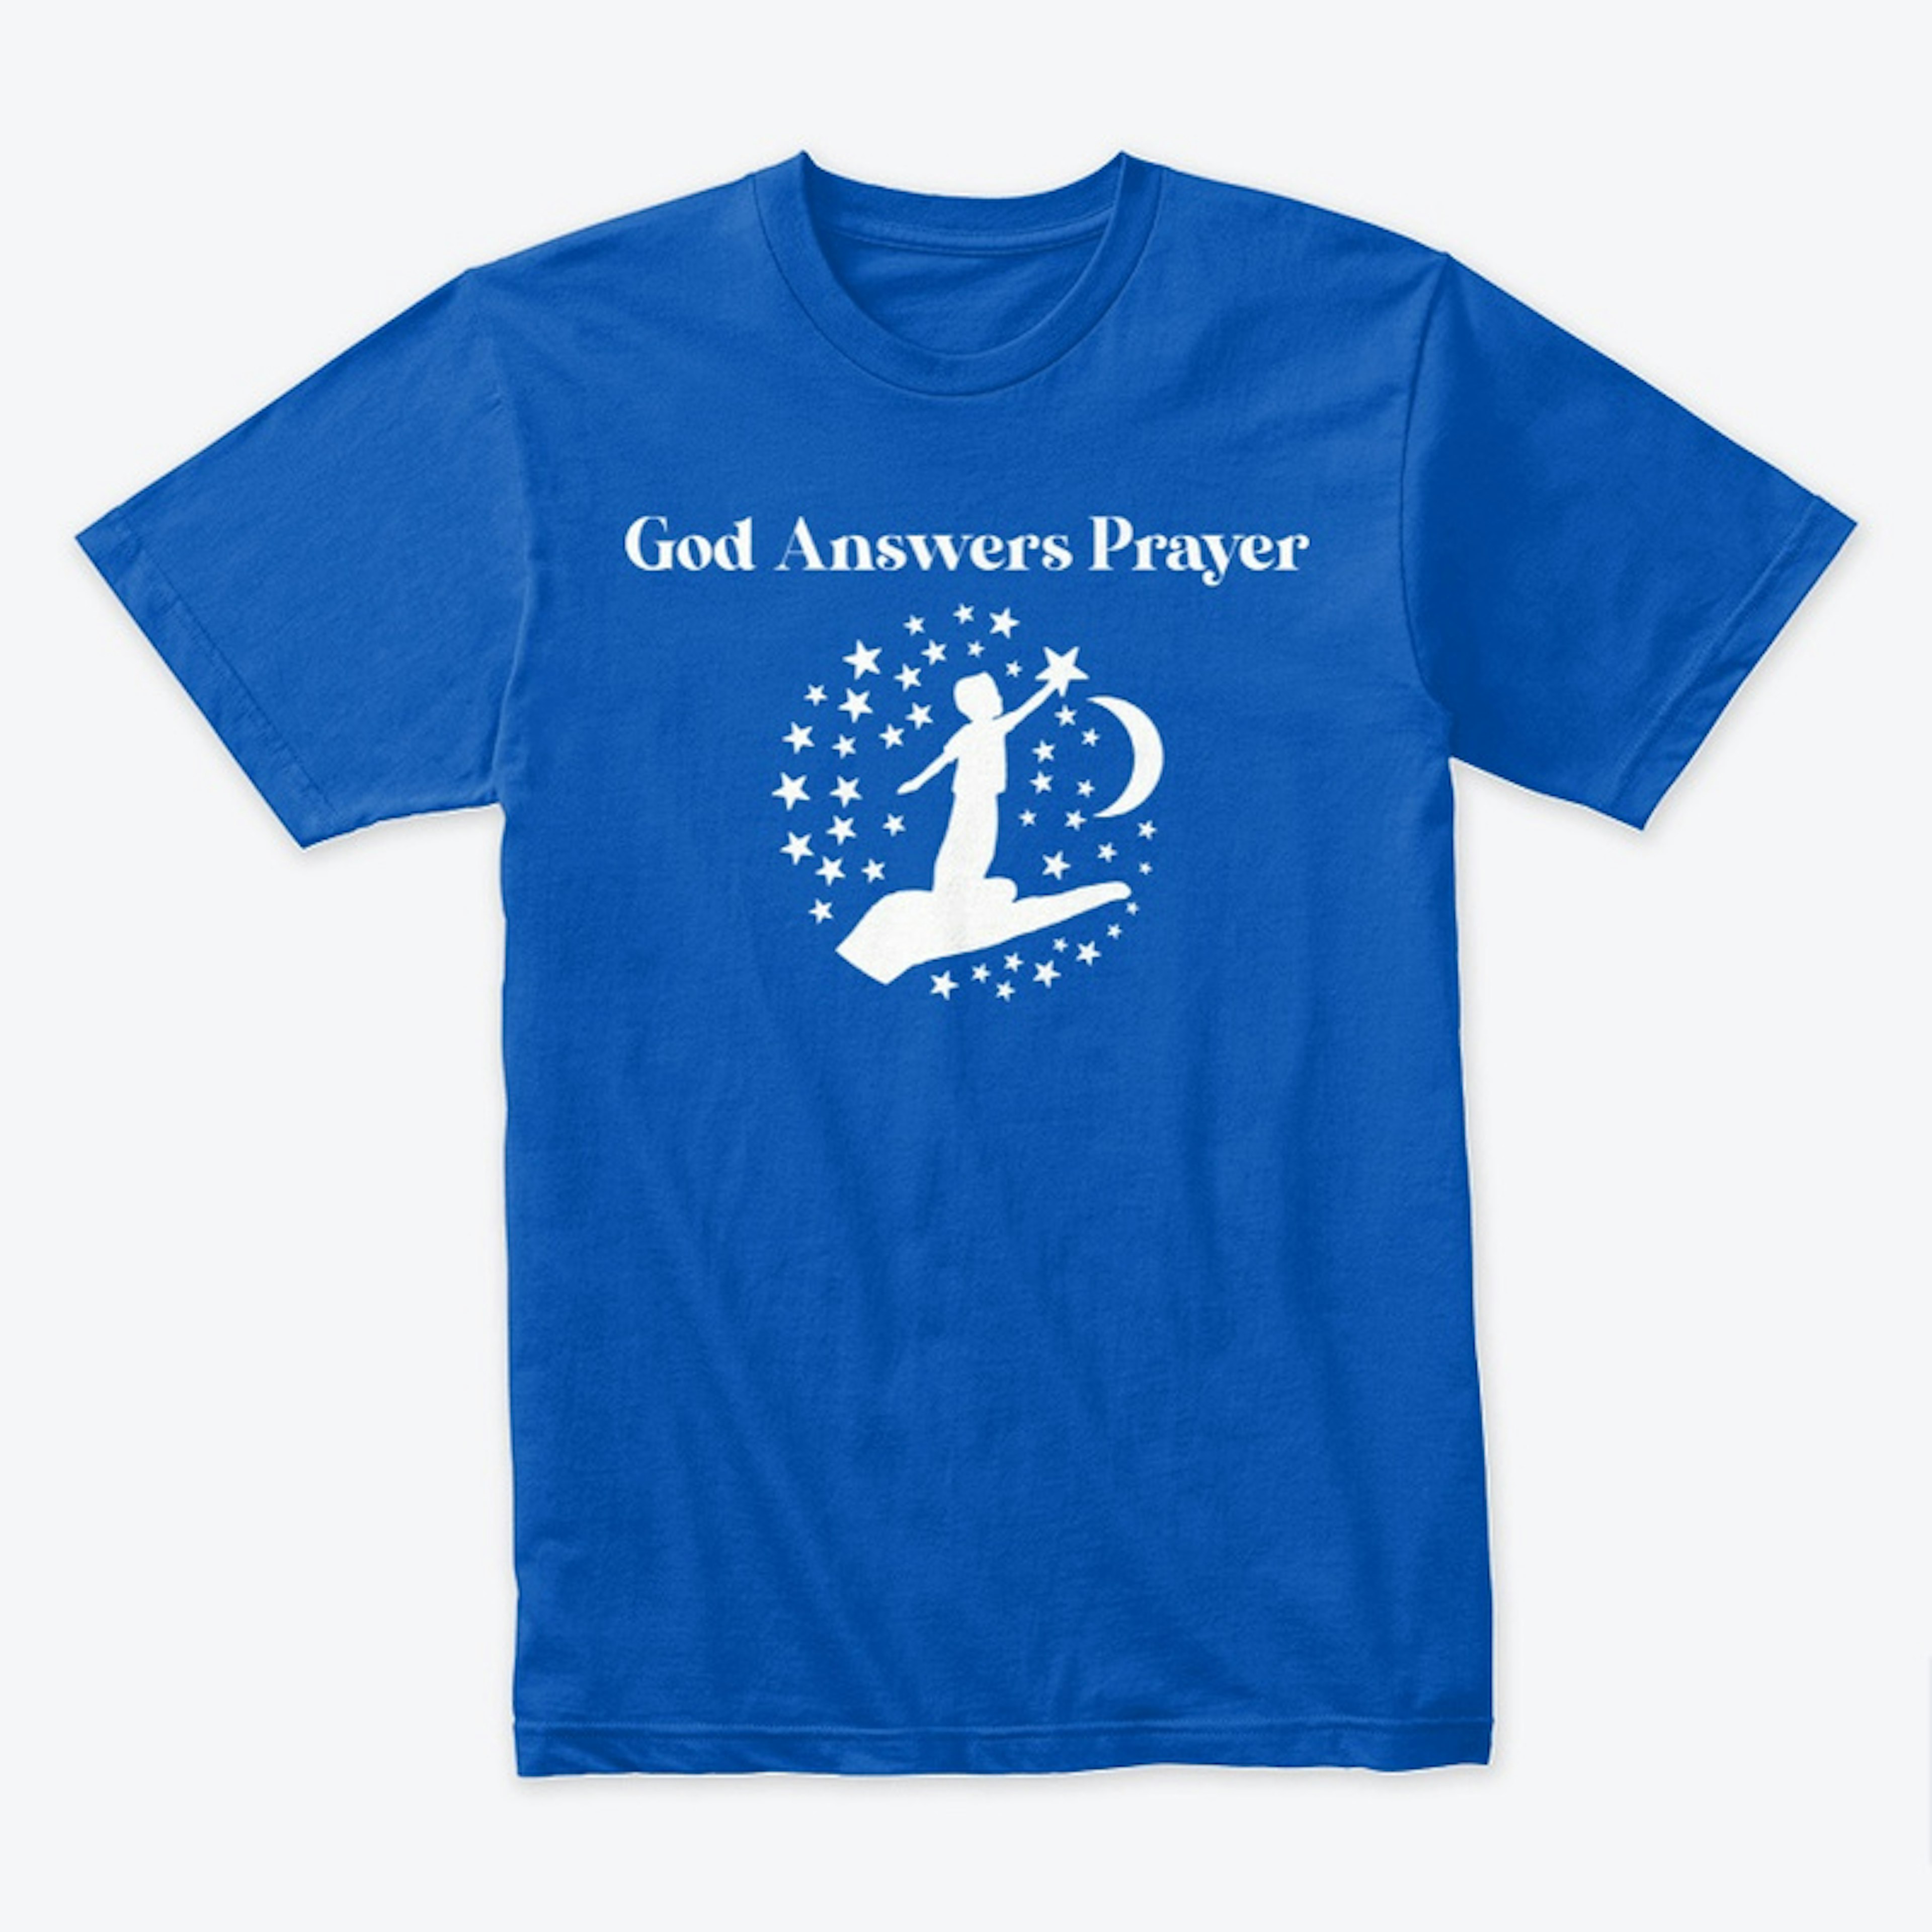 God Answers Prayer T-Shirt